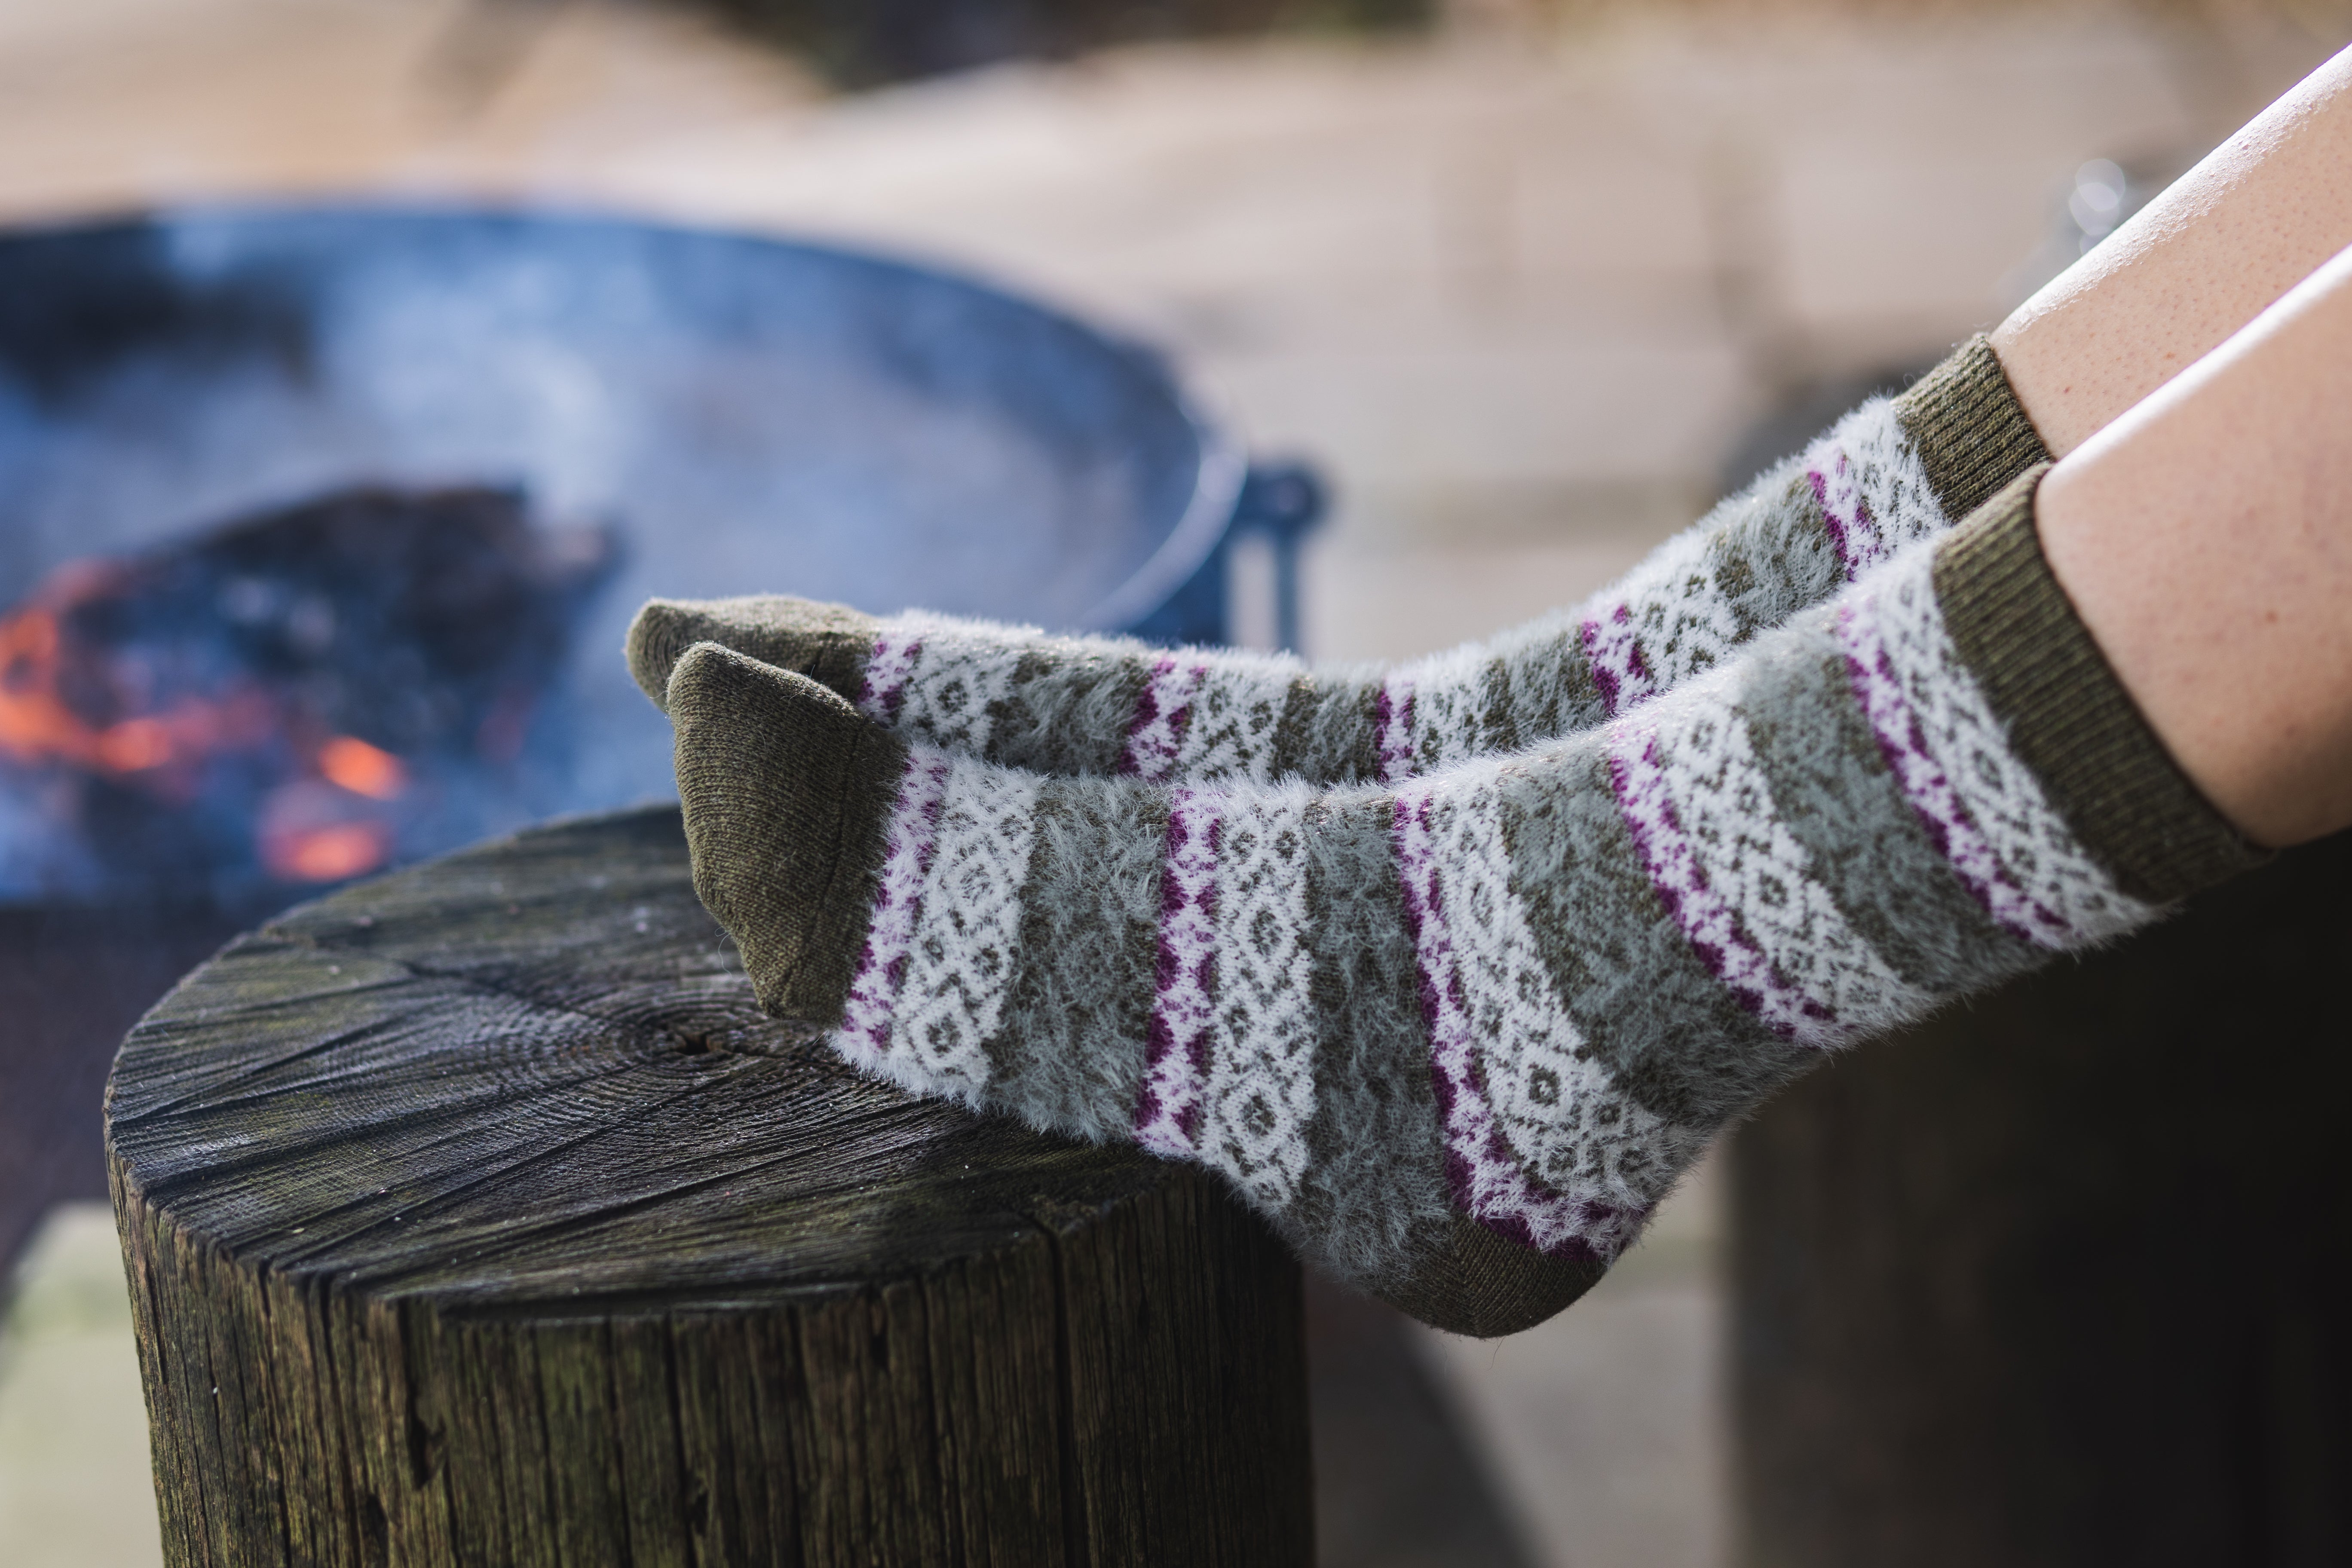 Sage green and pink soft wool blend patterned socks